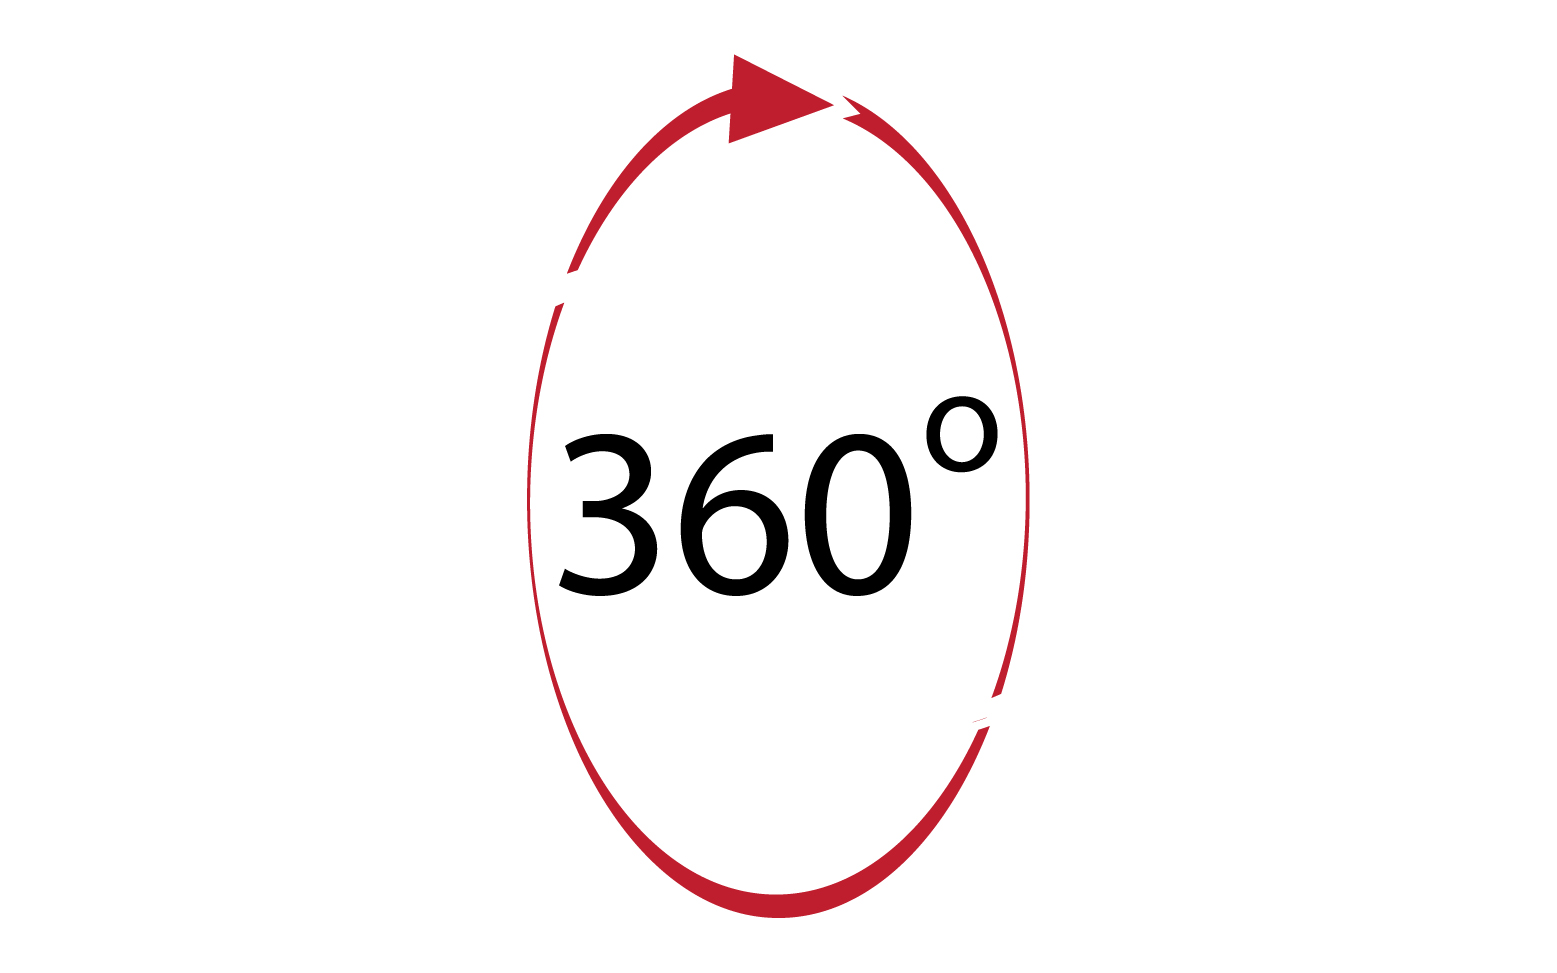 360 degree angle rotation icon symbol logo version v26